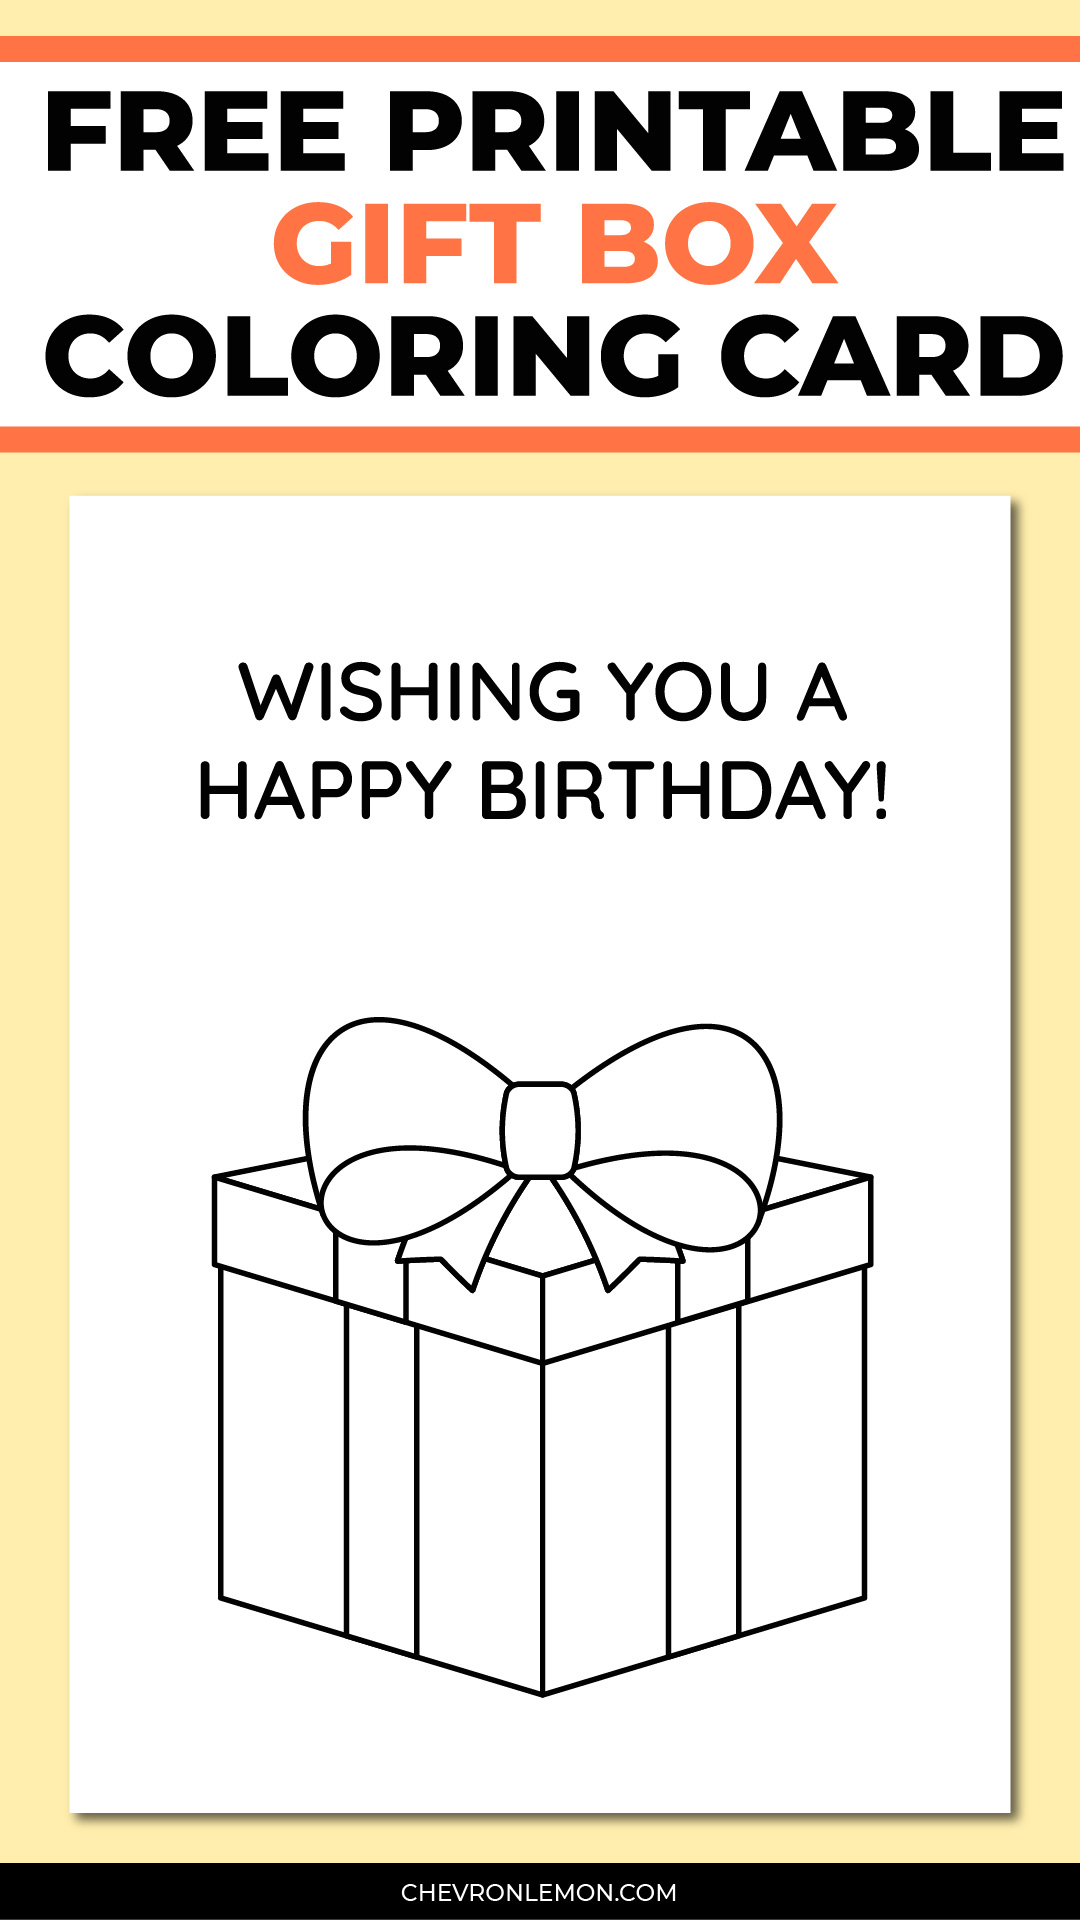 Birthday gift box coloring card